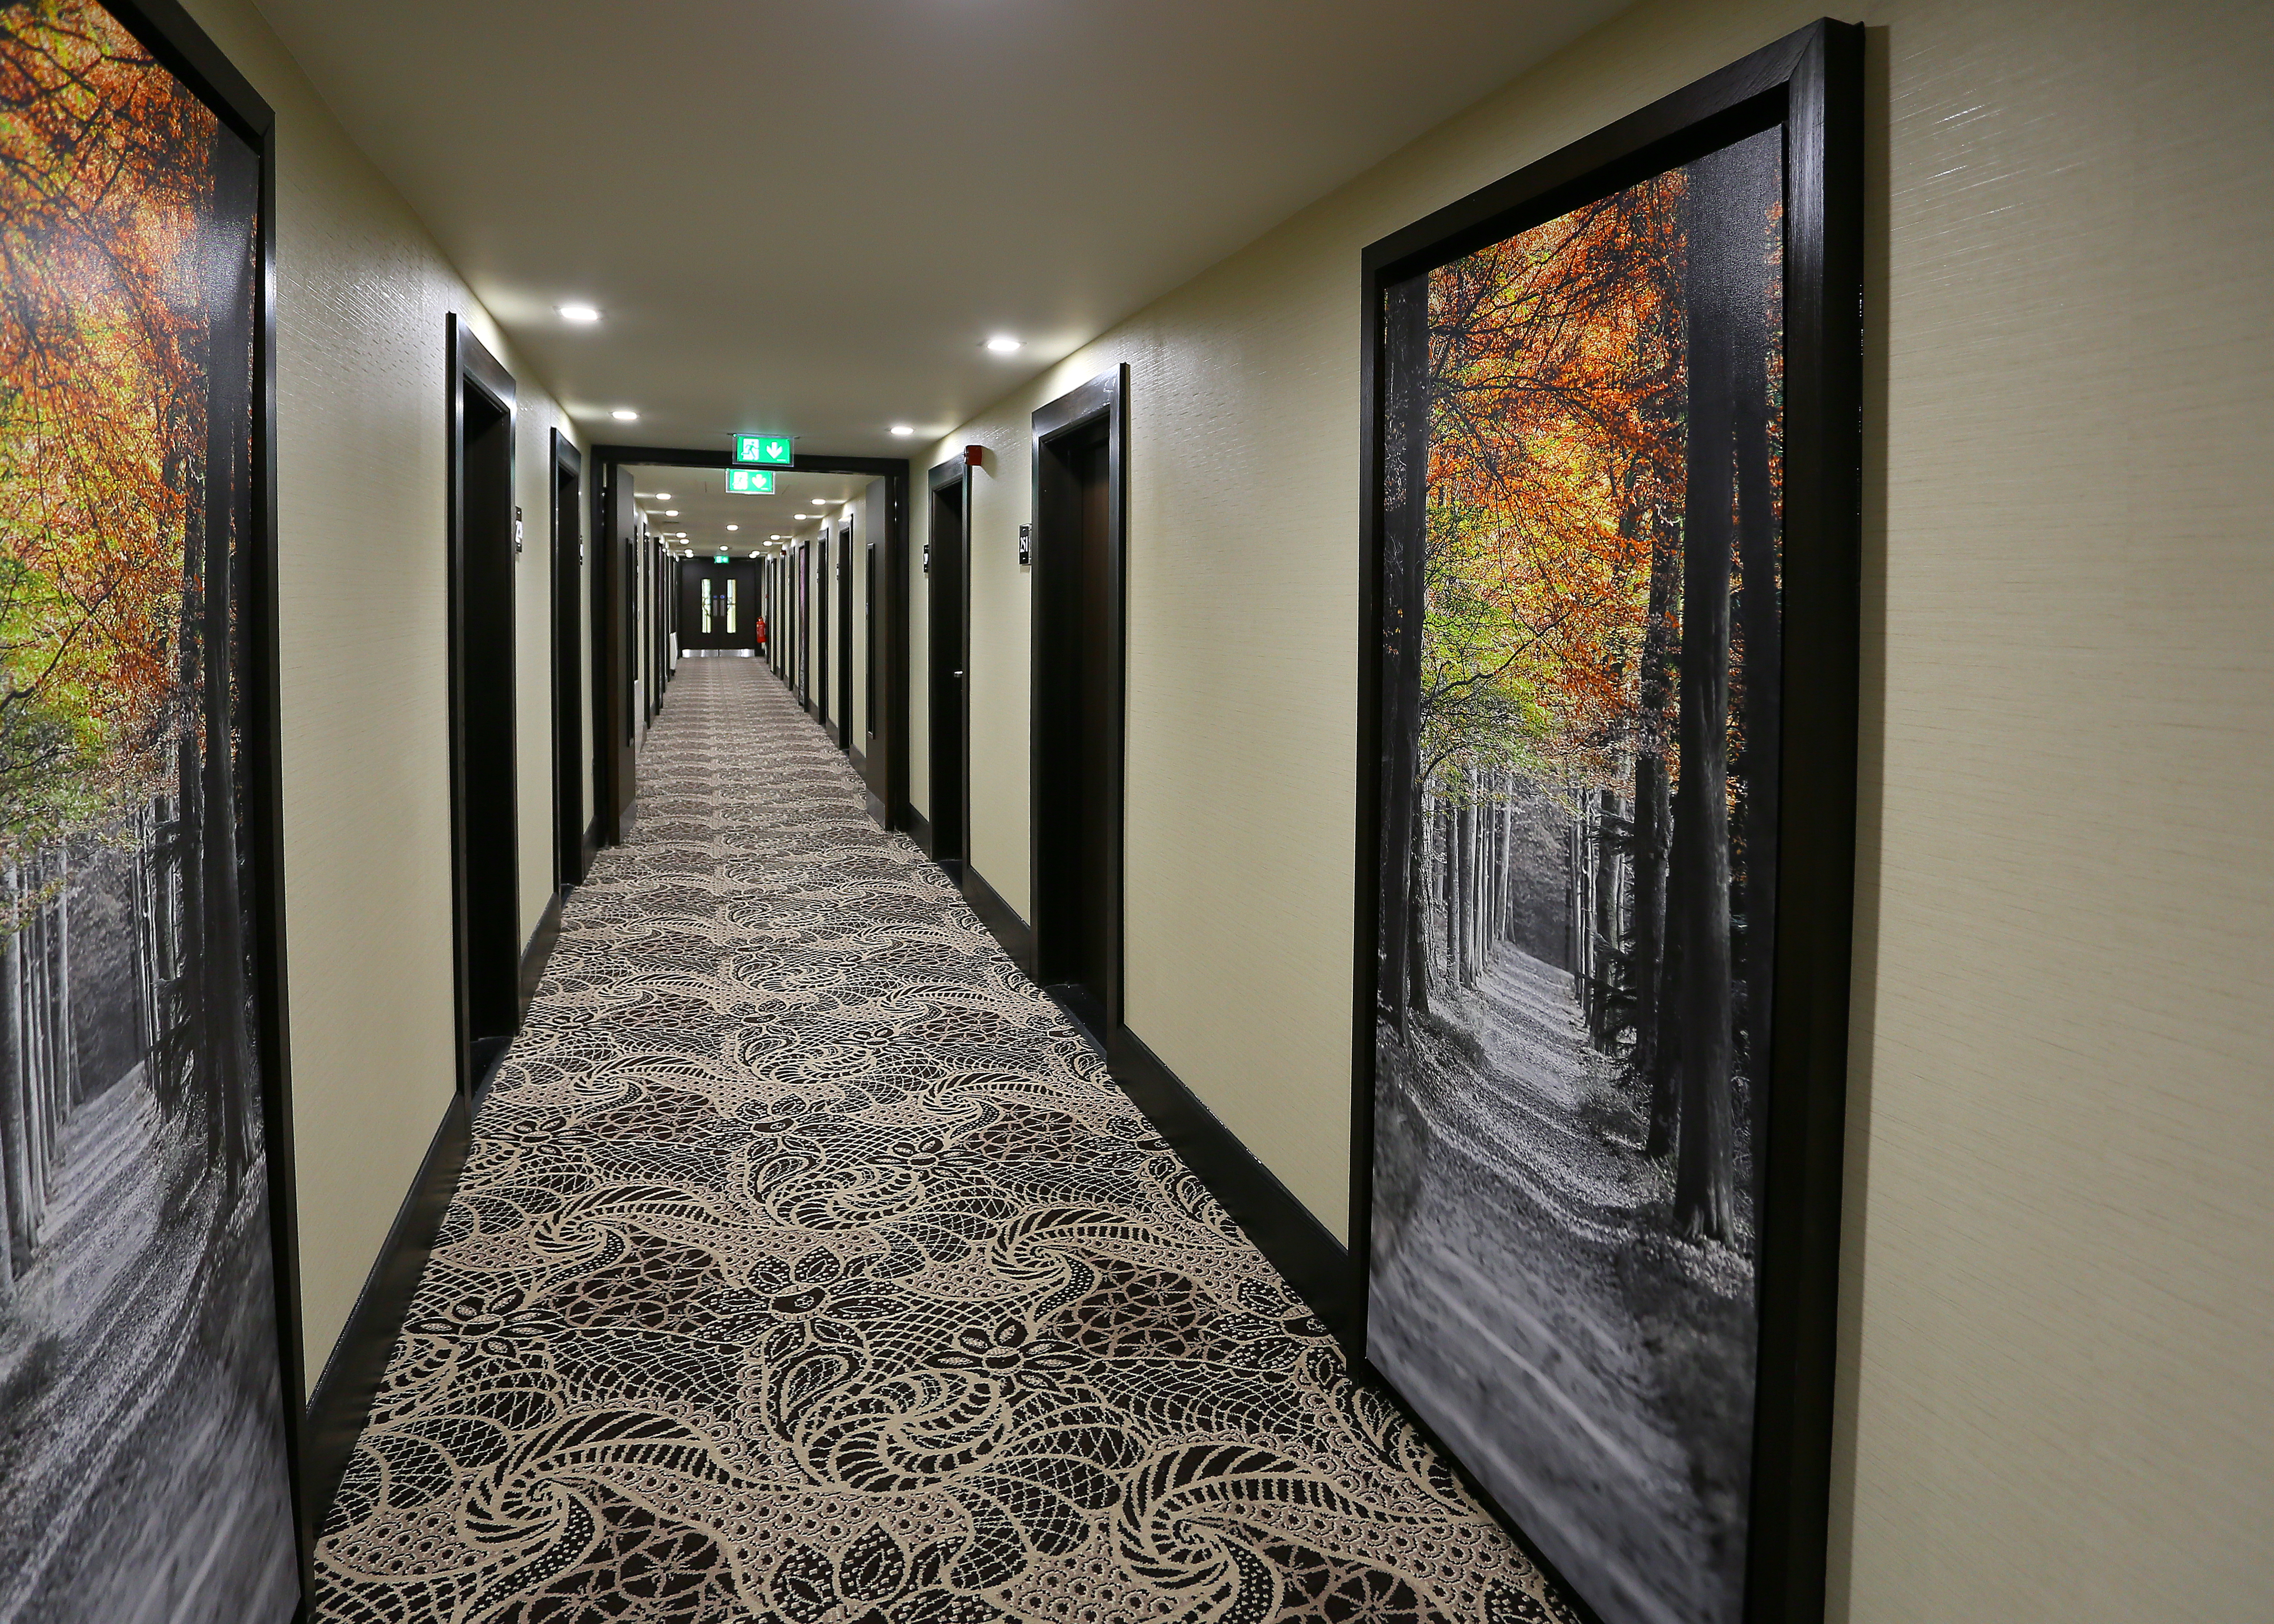 Long Corridor With Tree Art and Guest Room Doors